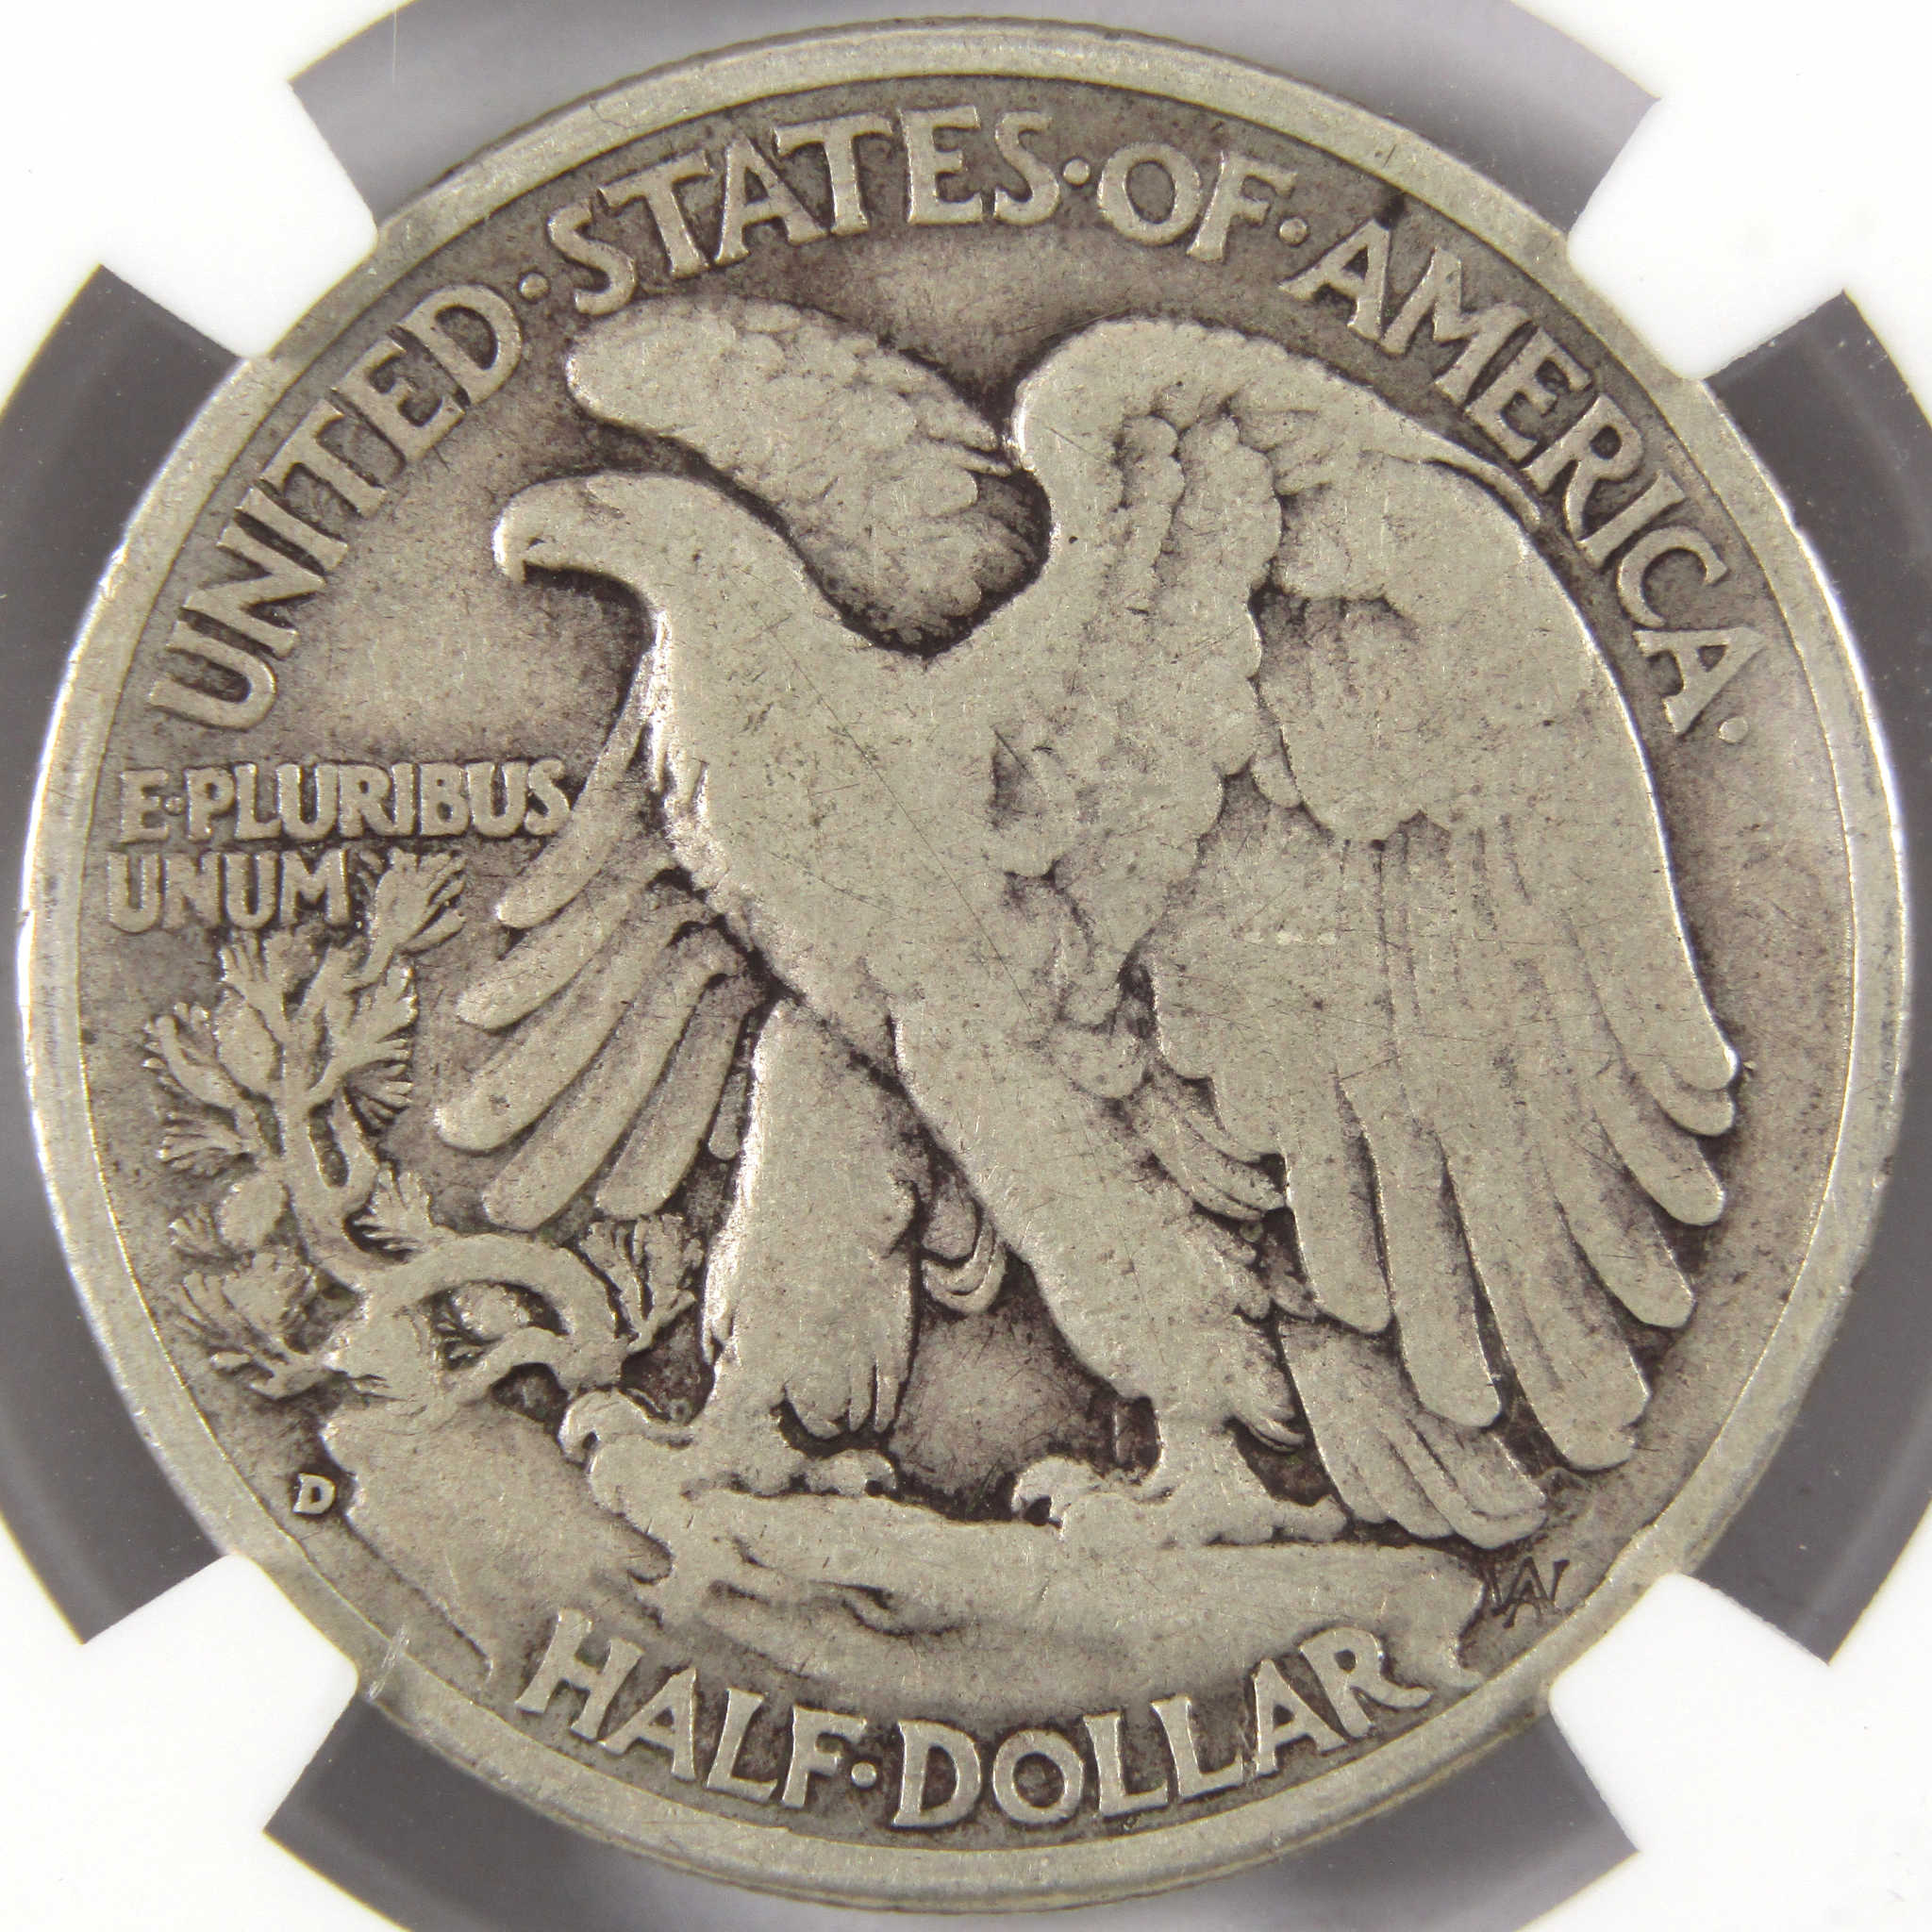 1938 D Liberty Walking Half Dollar F 15 NGC Silver 50c Coin SKU:I9472